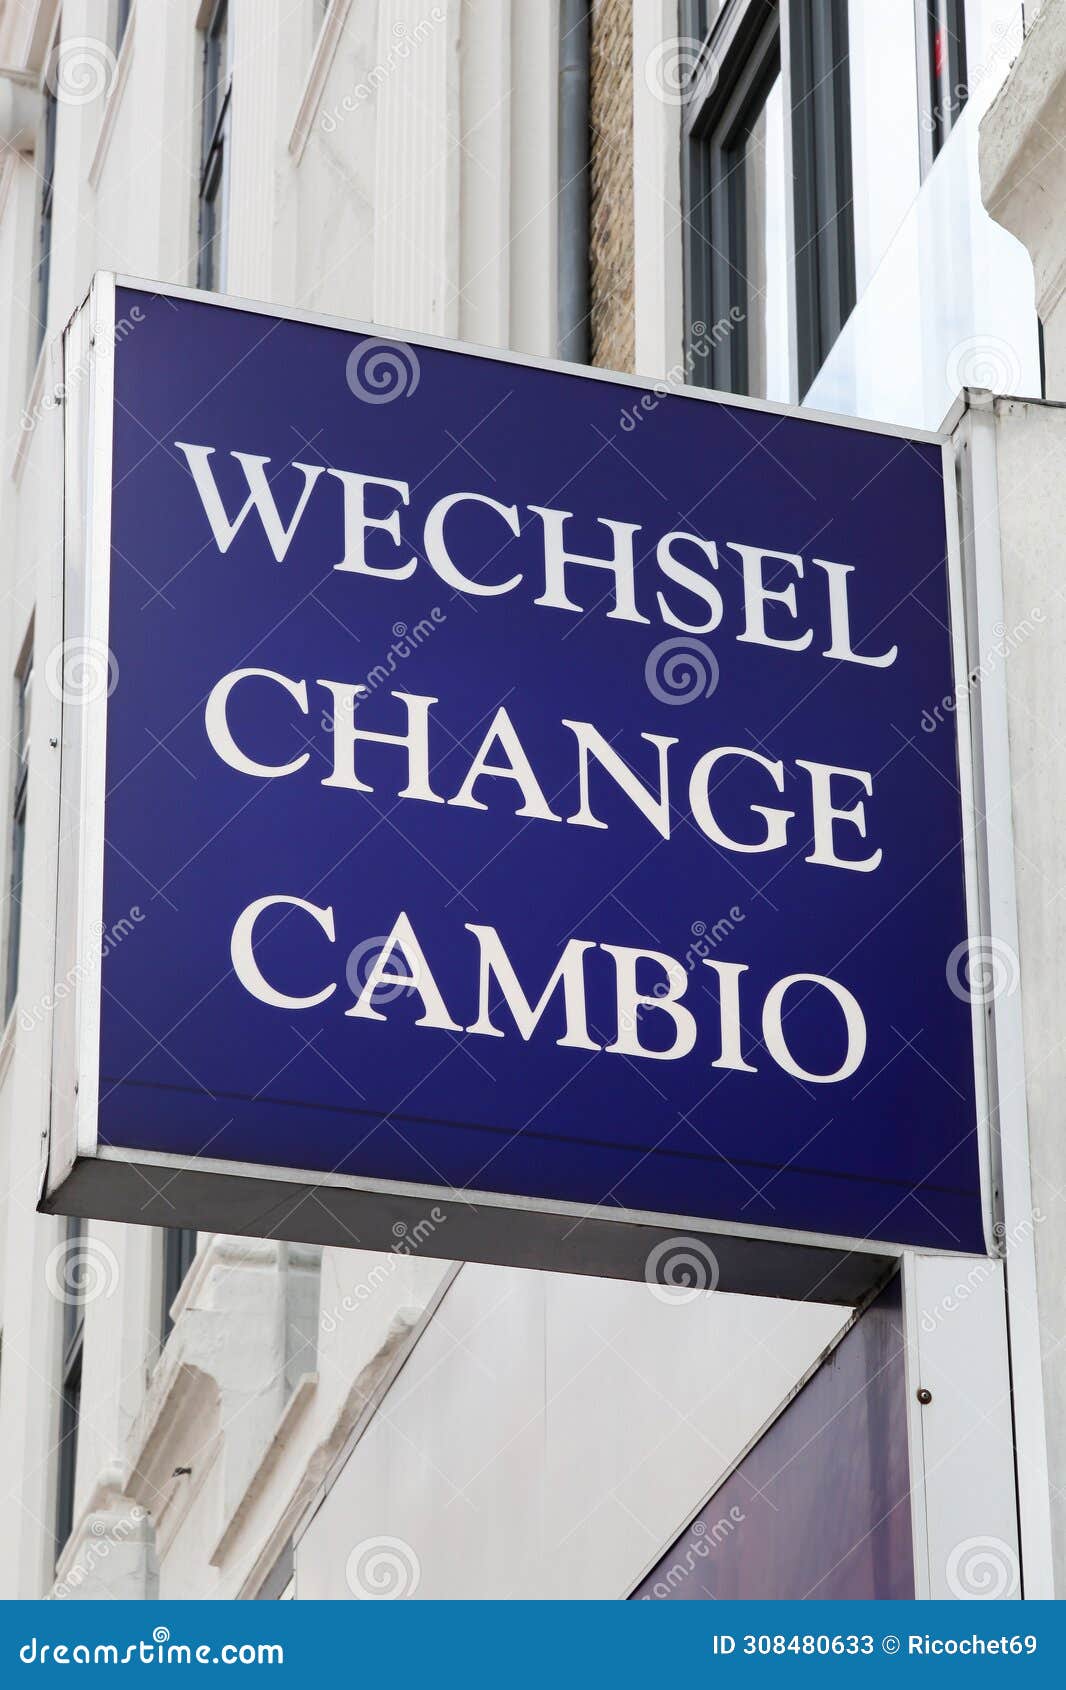 exchange, wechsel, change, cambio sign